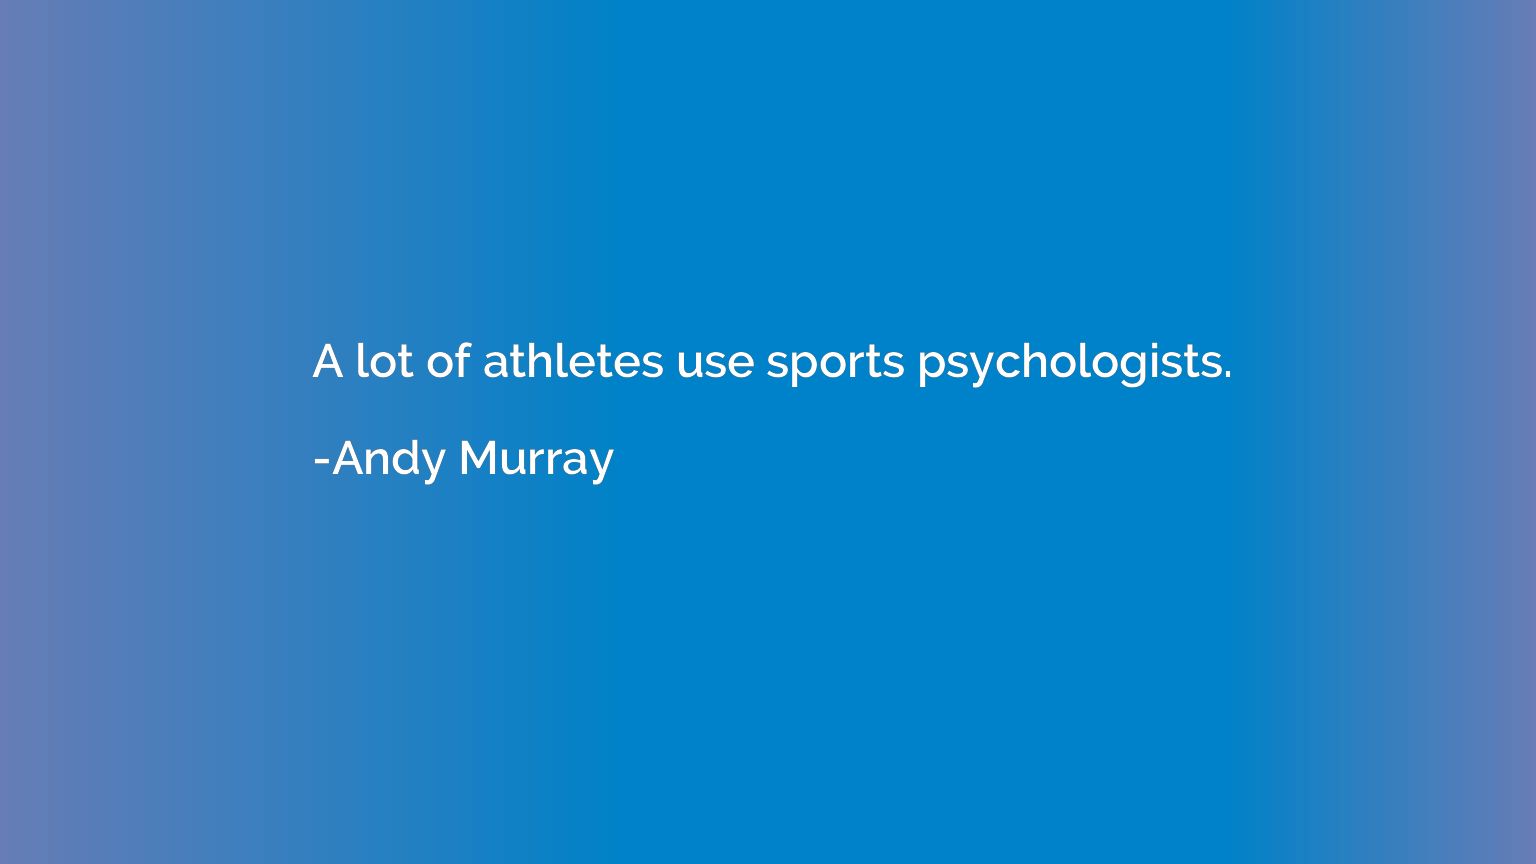 A lot of athletes use sports psychologists.